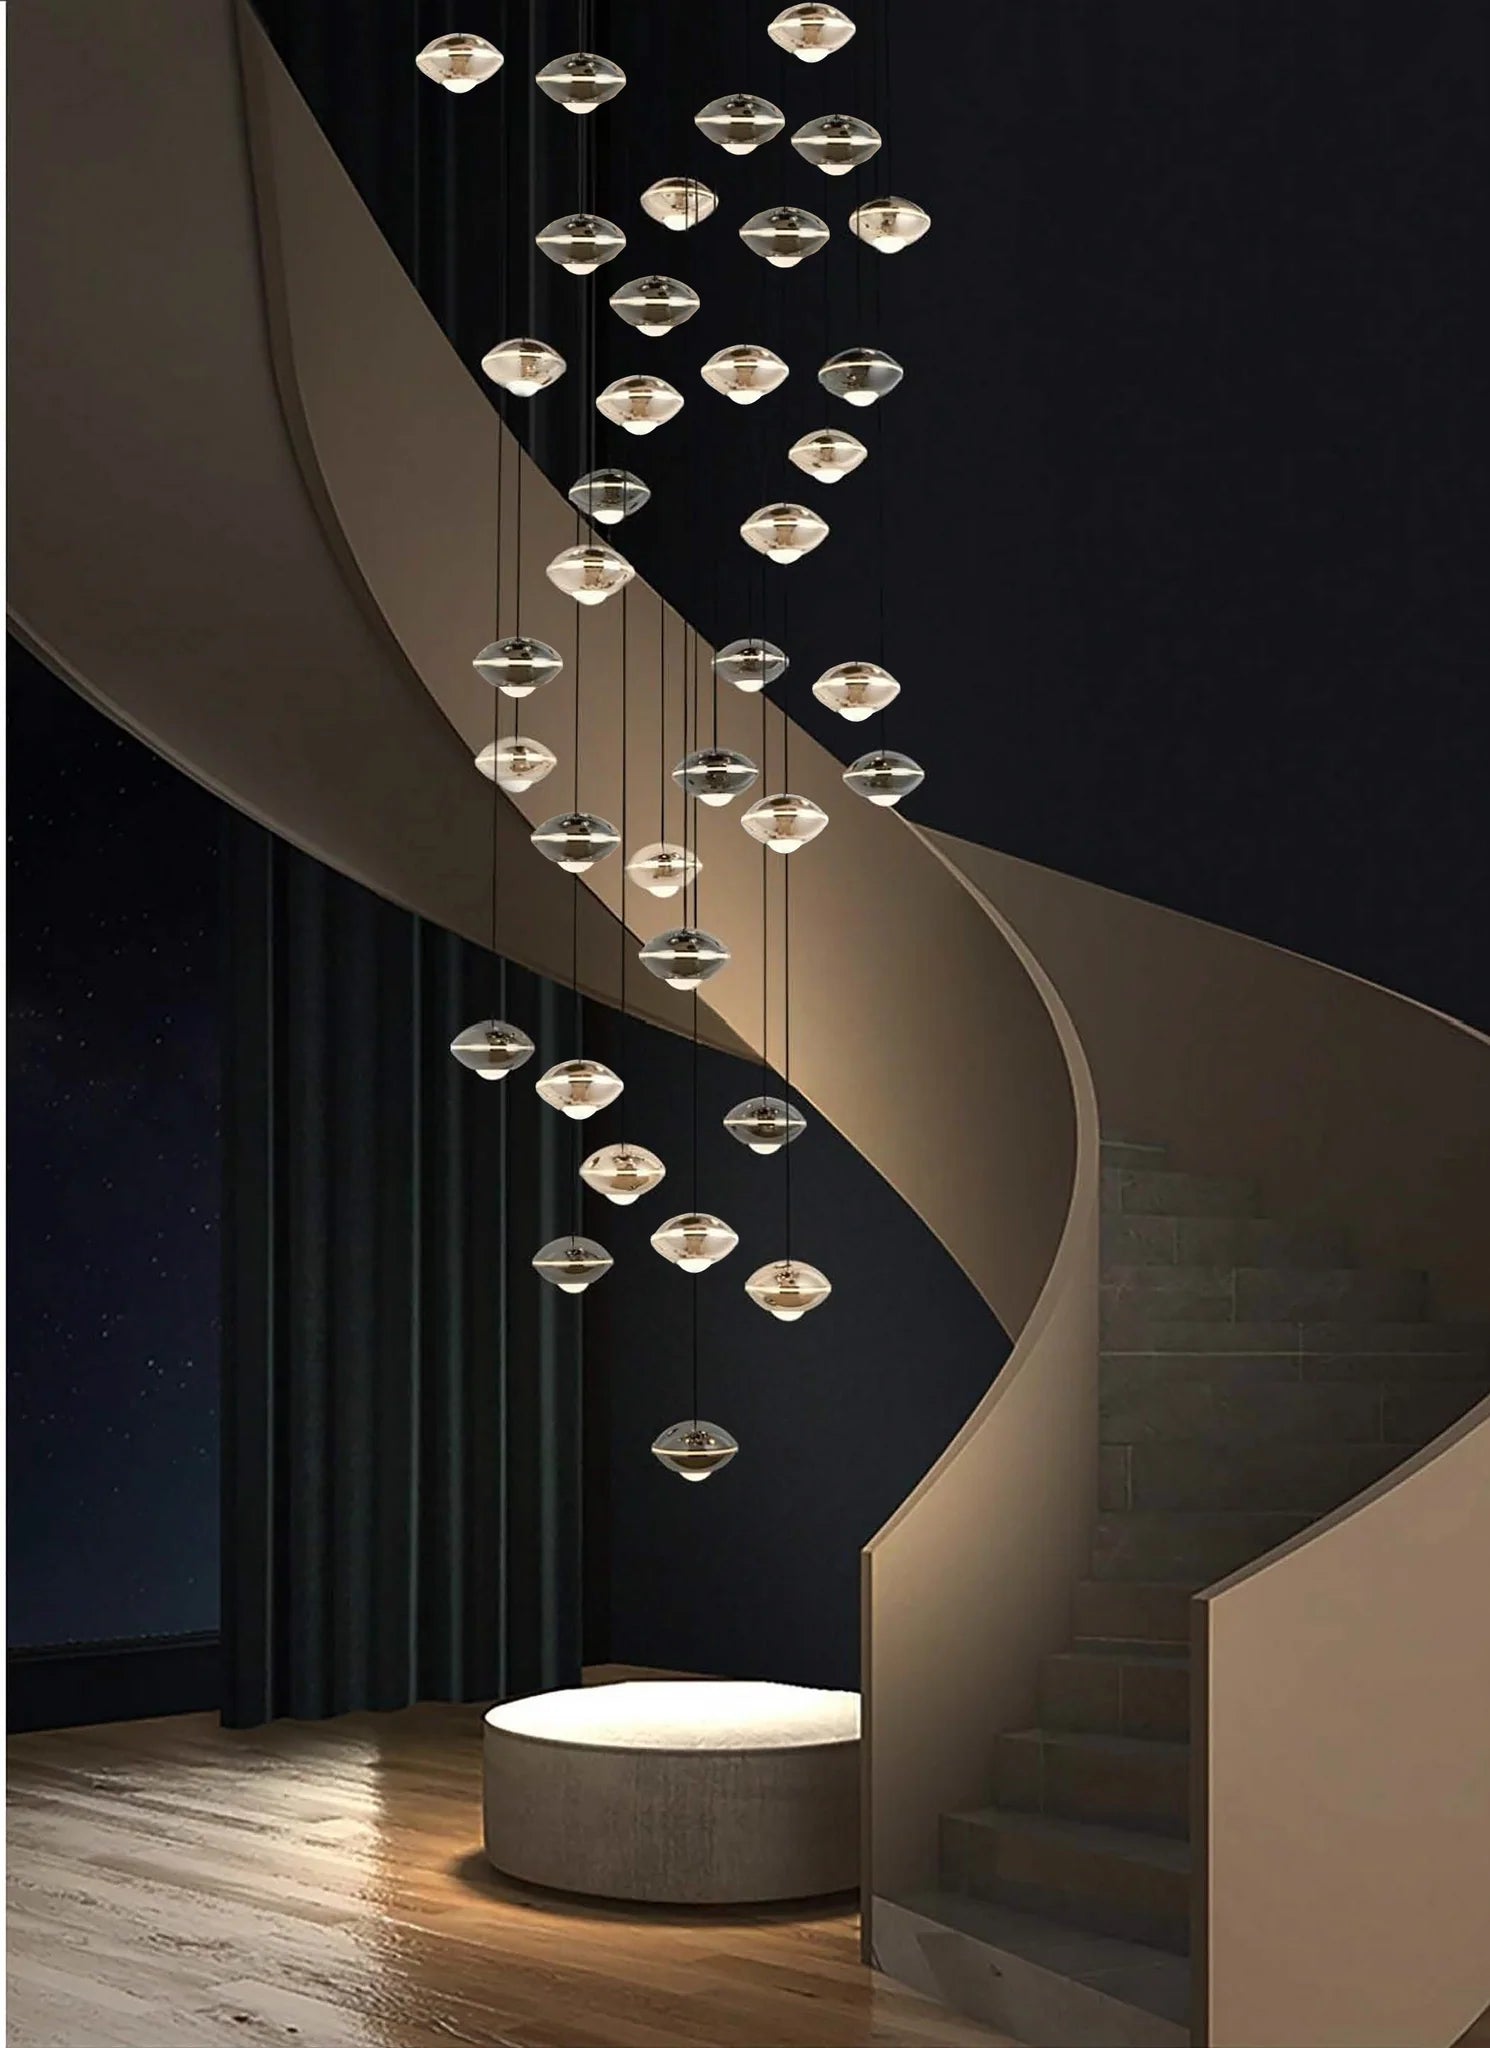 P0723-36A Premium Design Villa Loft Stair Chandeliers Lights Long Cable Hanging Metel Droplight For Restaurant, Bar, Indoor, Duplex Area Decorative Lighting Fixtures